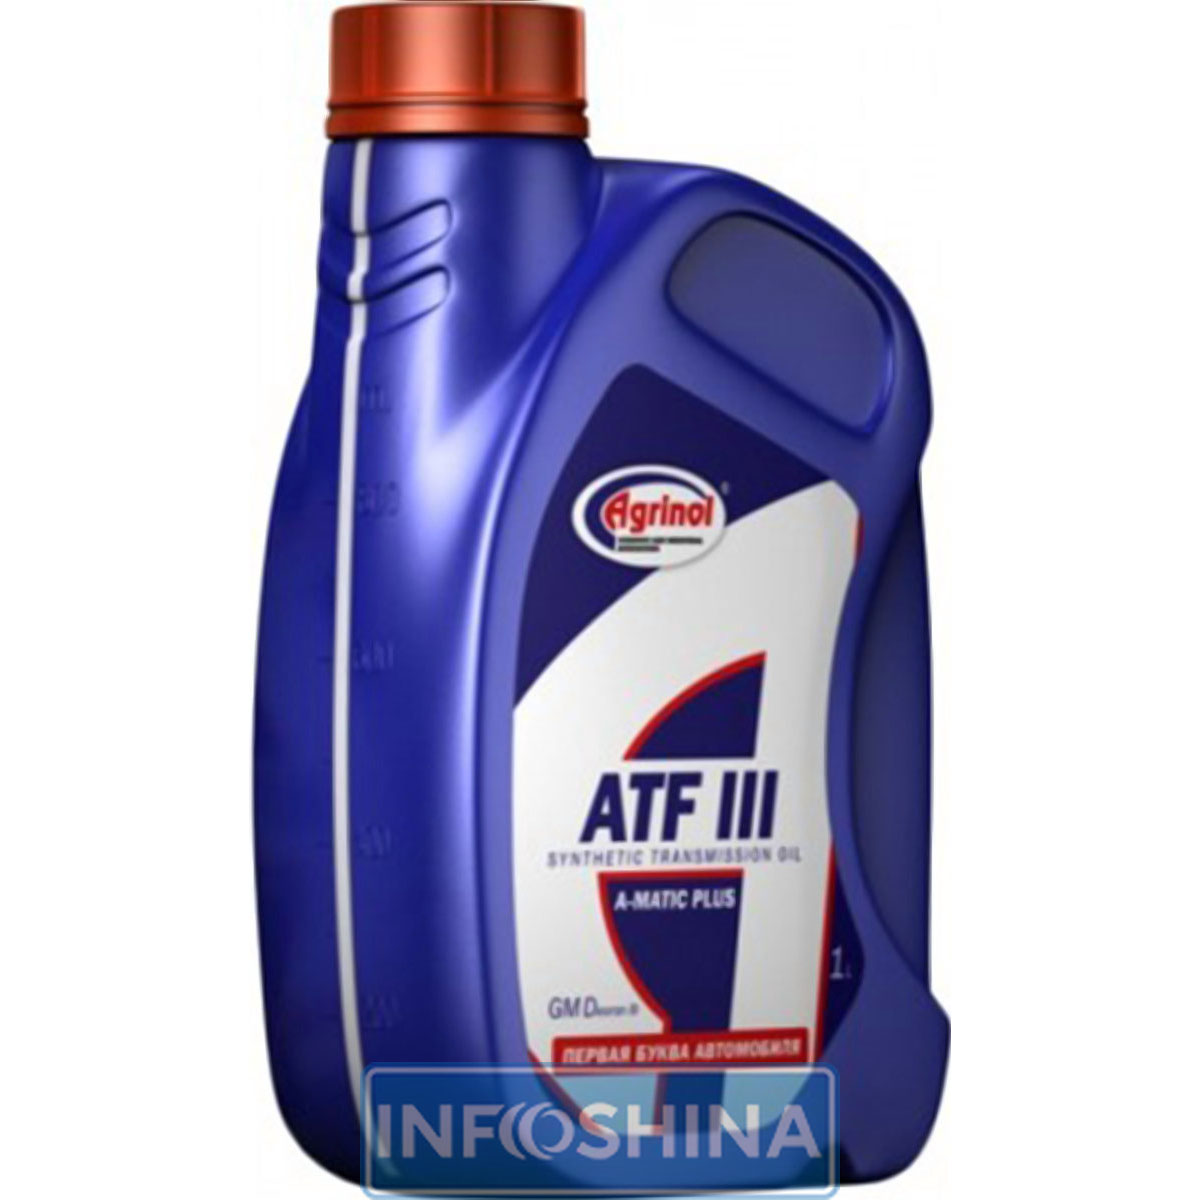 Agrinol ATF III